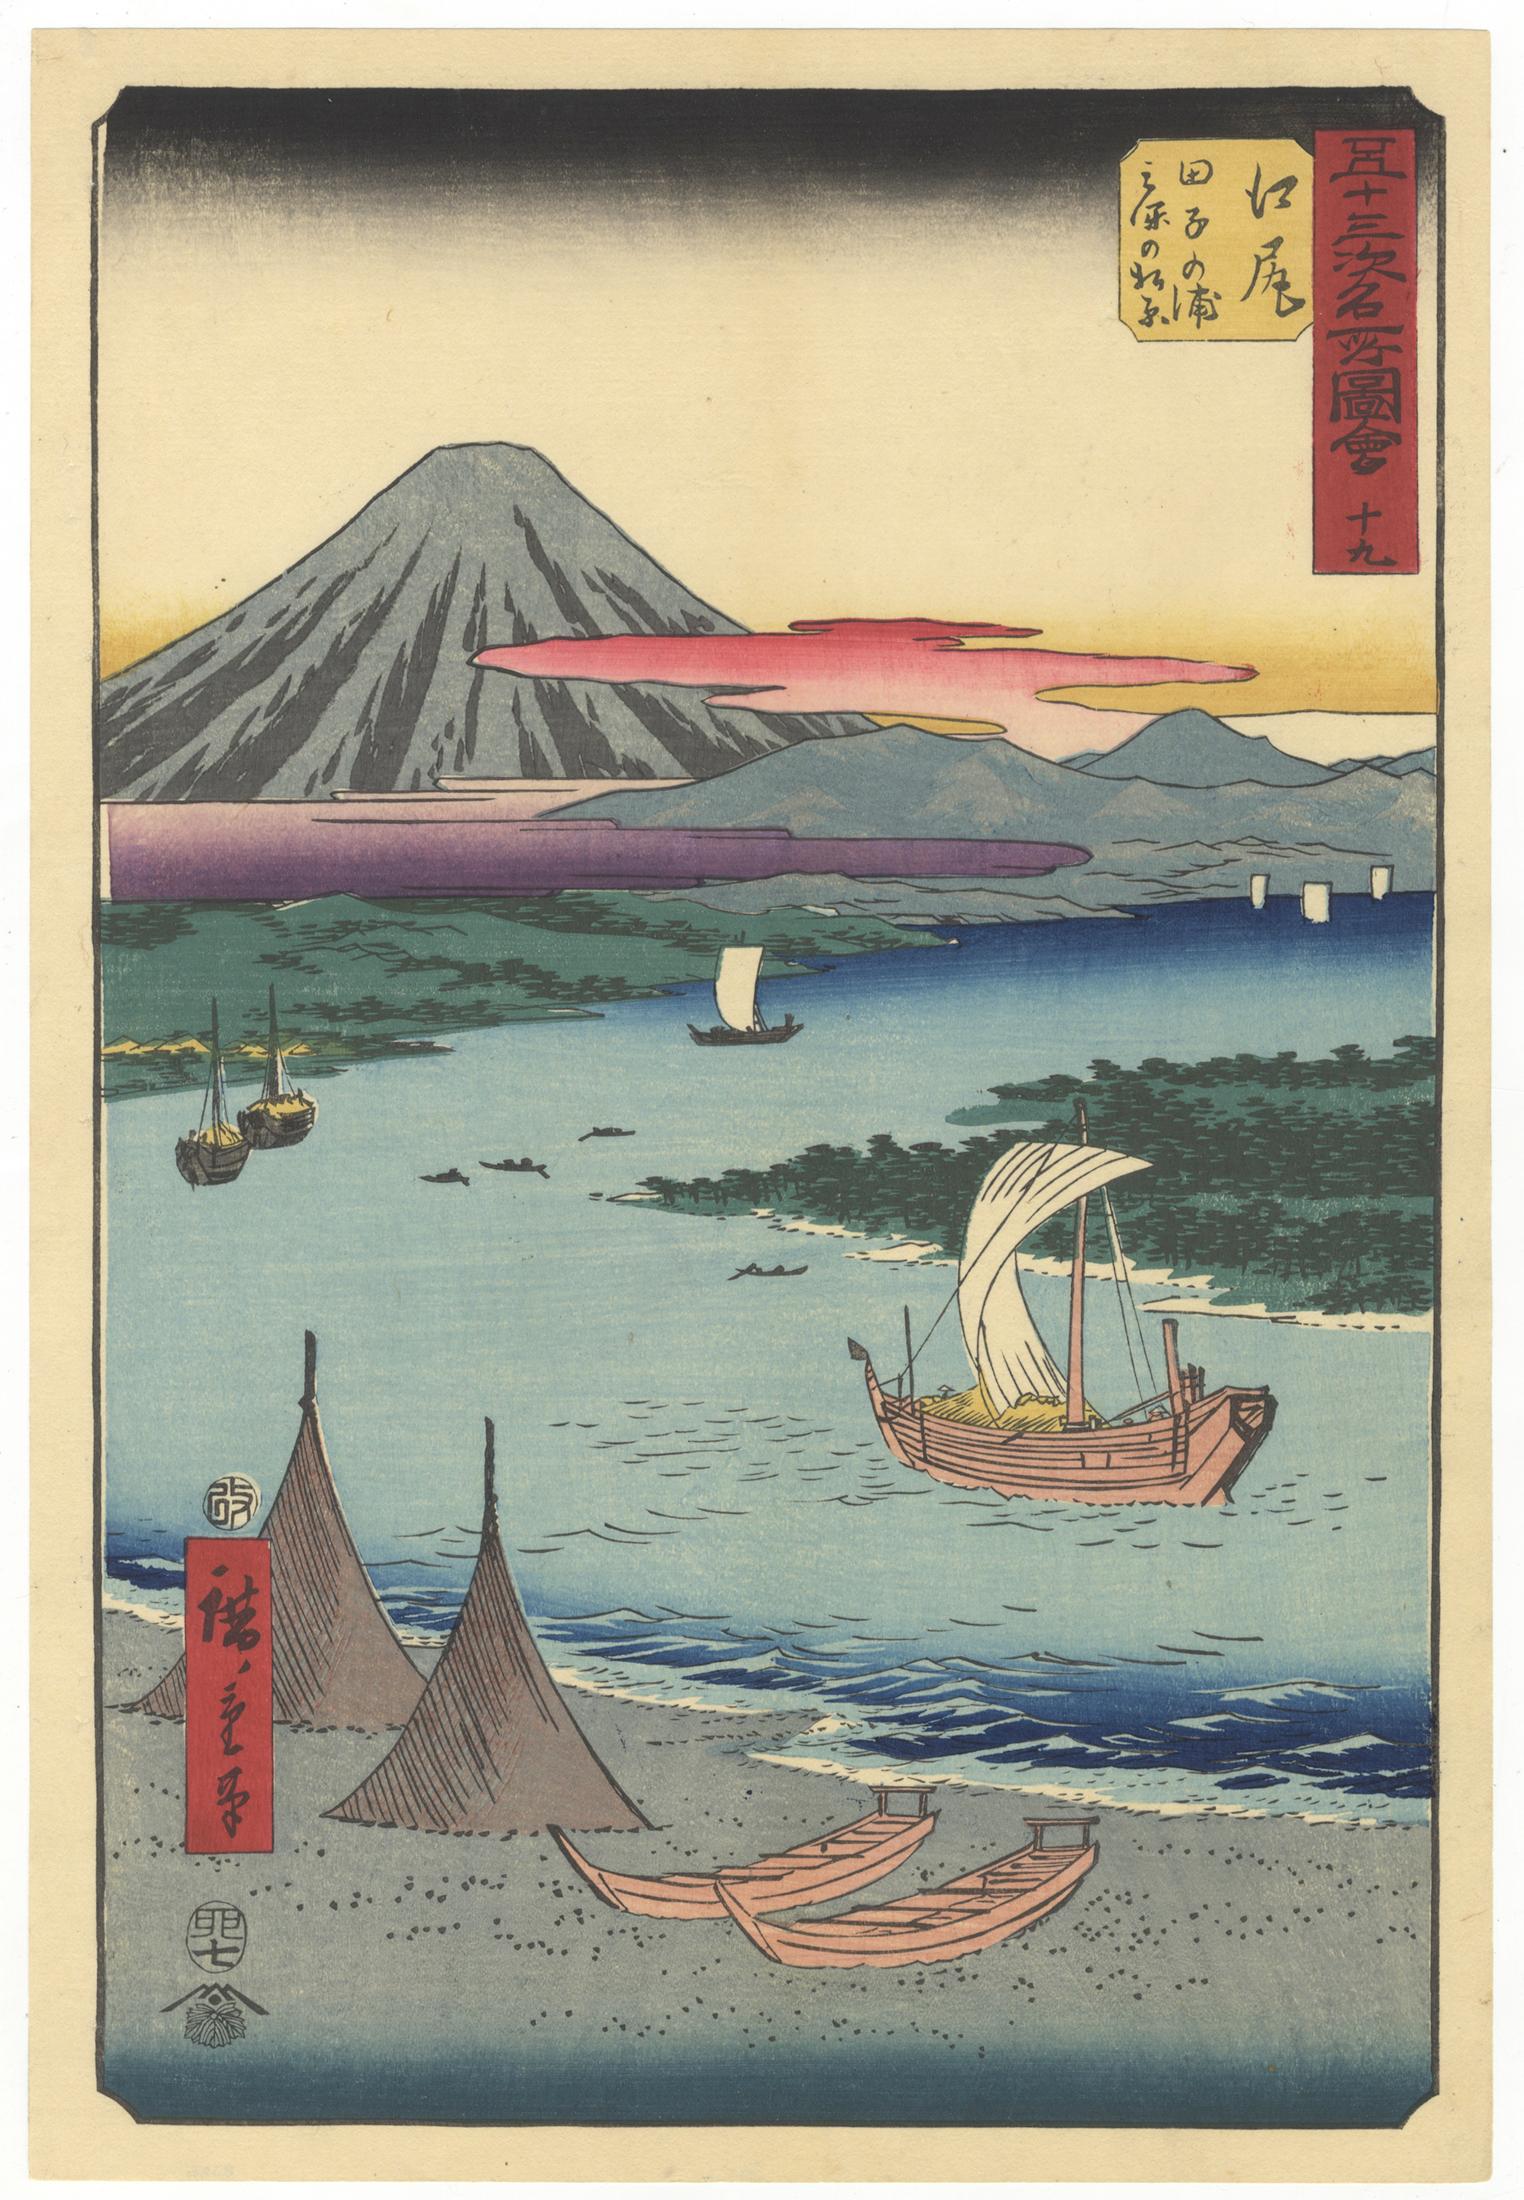 Utagawa Hiroshige (Ando Hiroshige) Landscape Print - Hiroshige Ando, Tokaido, Landscape, Original Japanese Woodblock Print, Boats